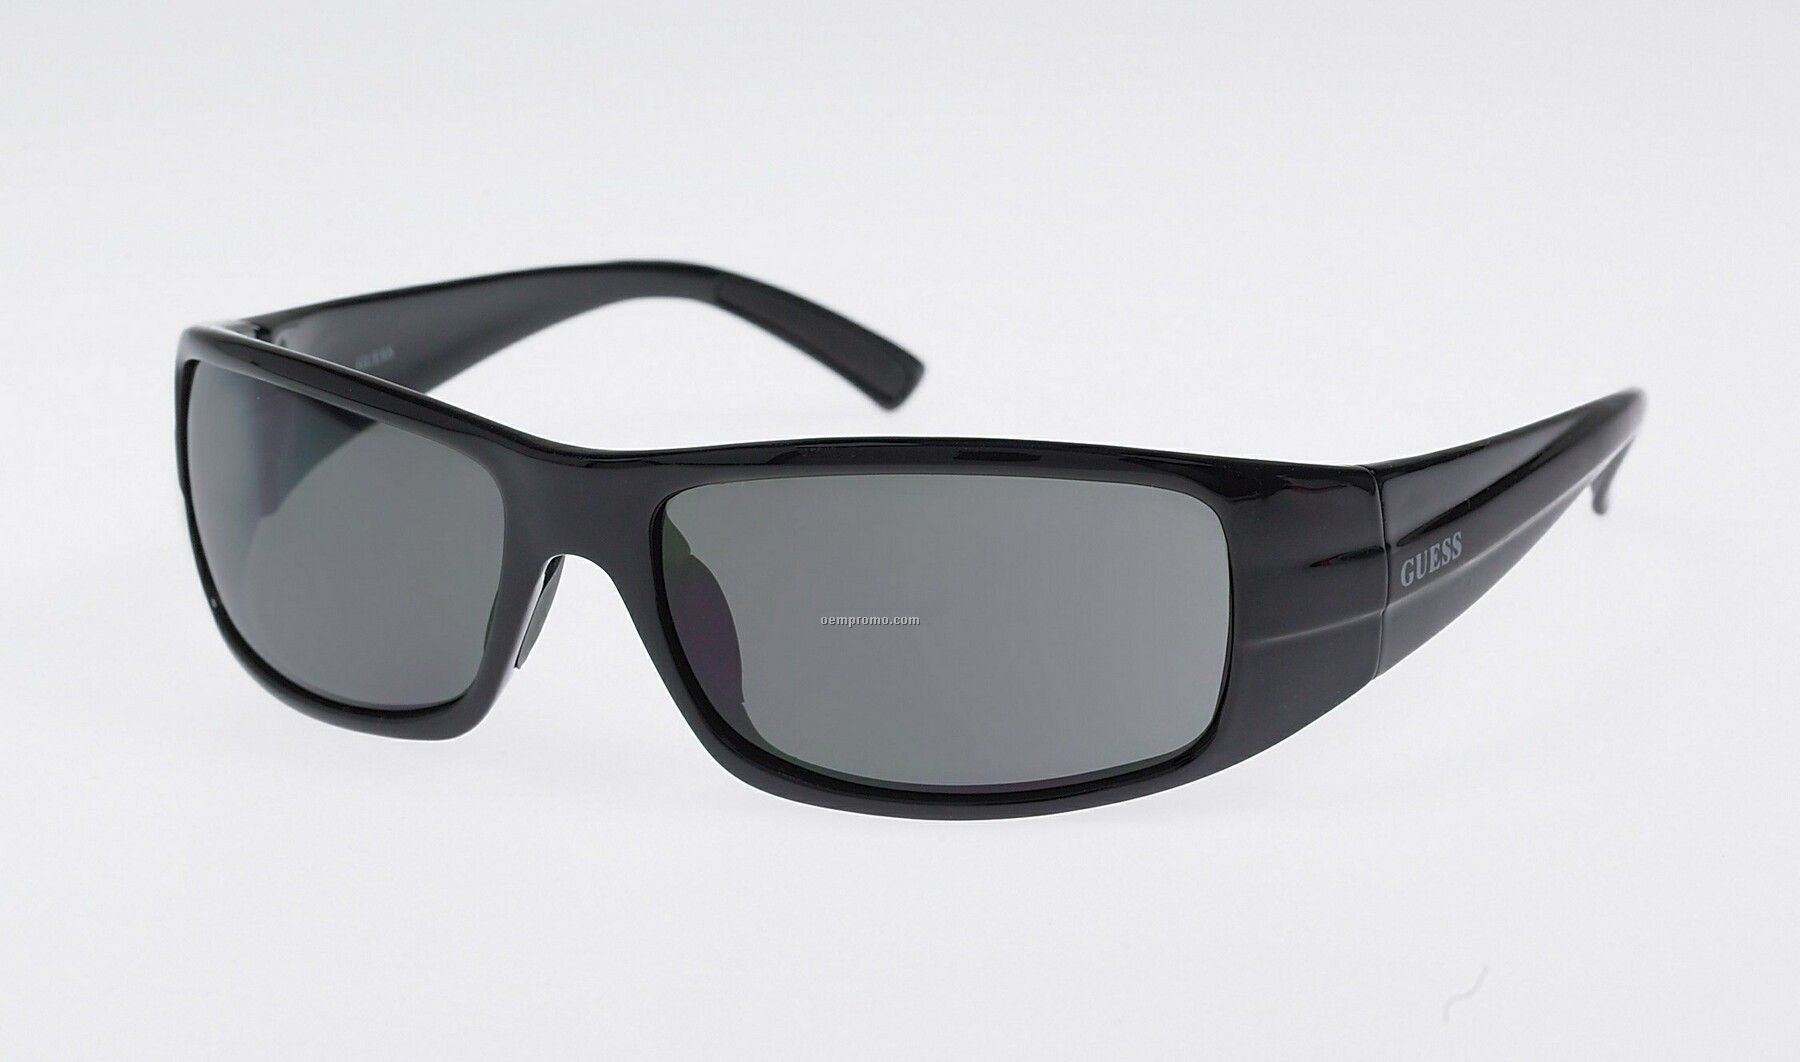 Black Guess Mens Sunglasses W/ Grey Lens